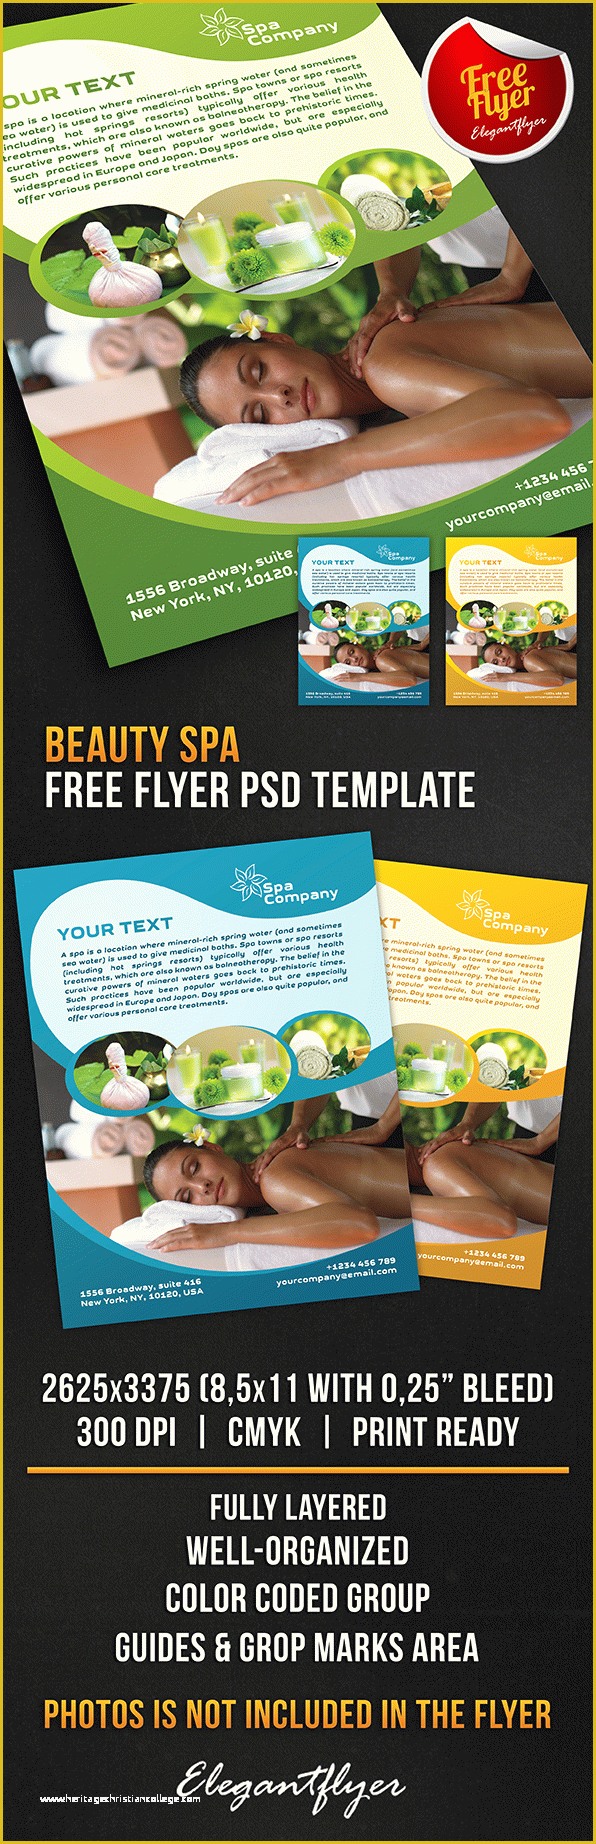 Beauty Salon Flyer Templates Psd Free Download Of Beauty Spa Free Flyer Psd Template